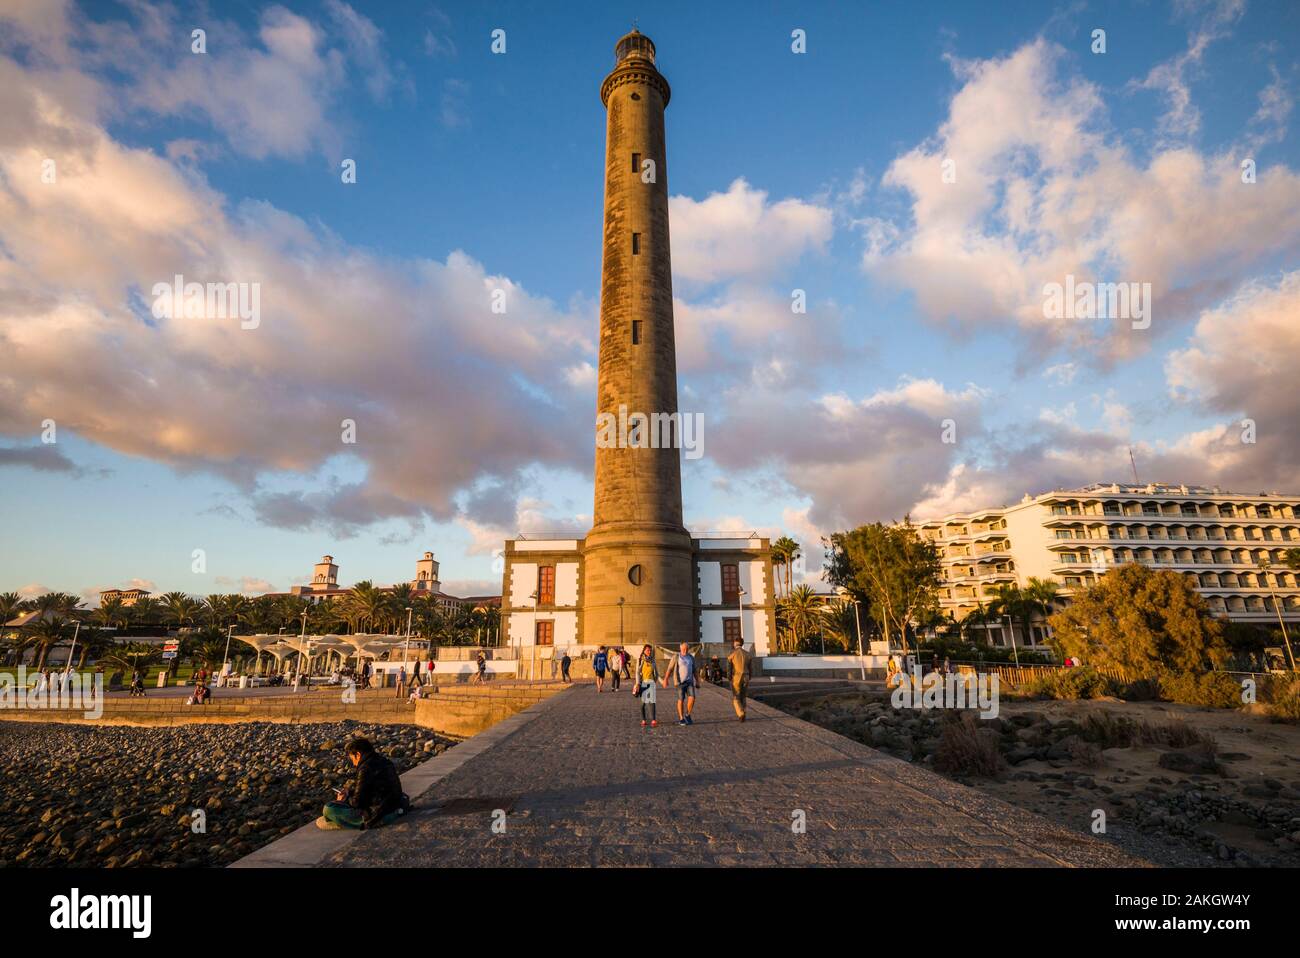 Spain, Canary Islands, Gran Canaria Island, Maspalomas, Maspalomas Lighthouse, sunset with visitors Stock Photo